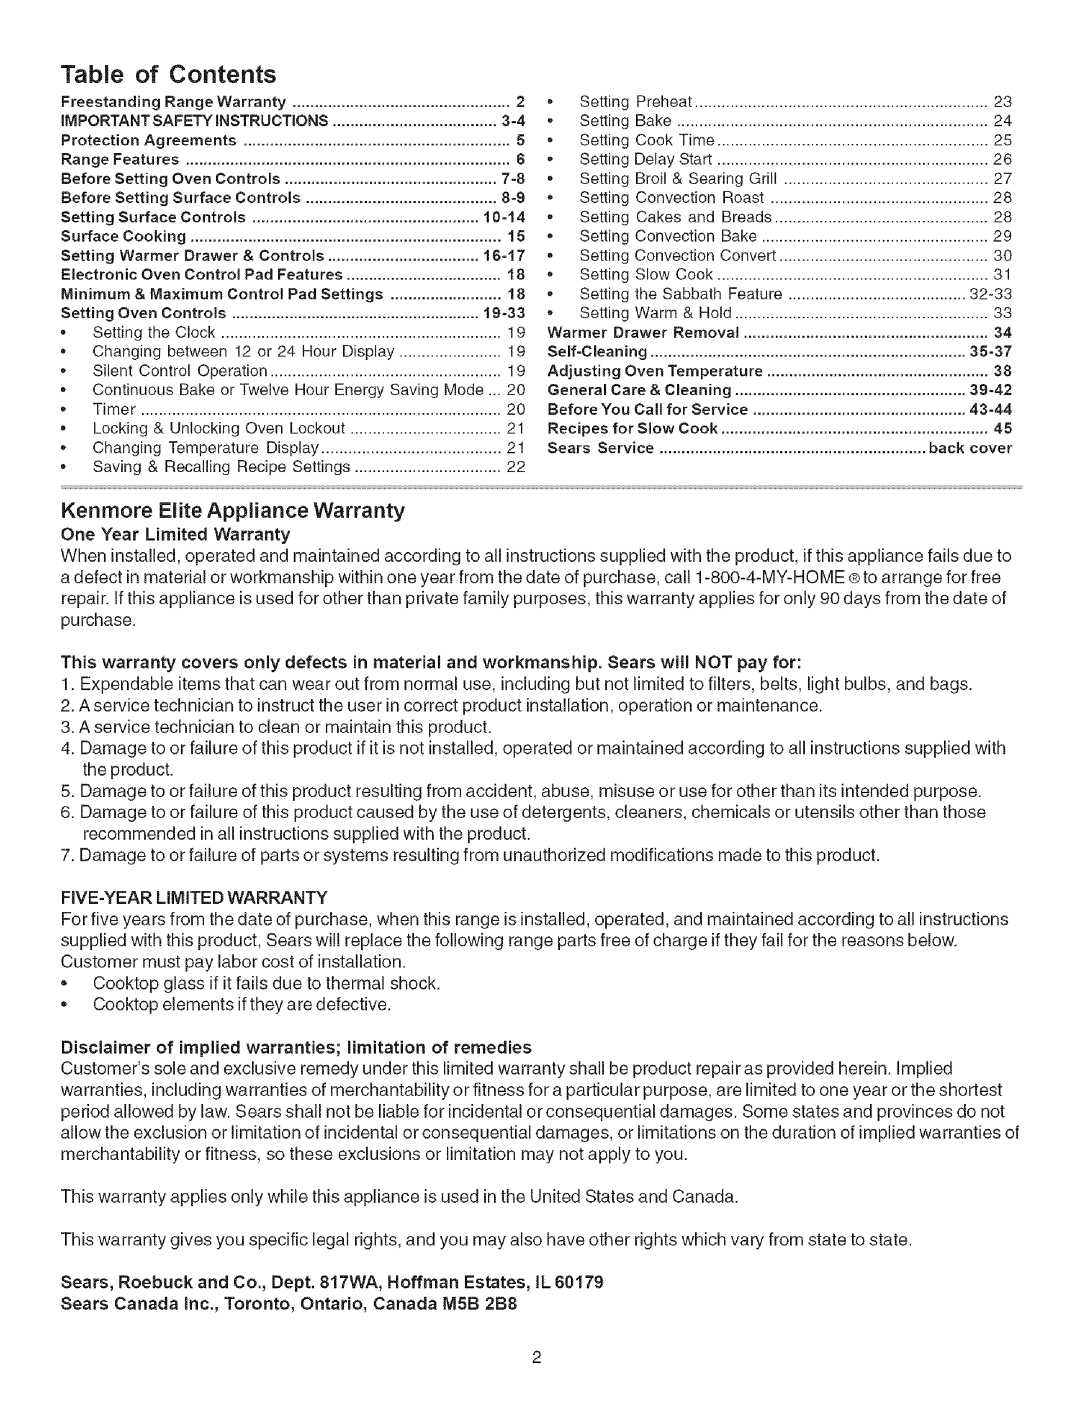 Kenmore 790.9659 manual Contents, Kenmore Elite Appliance Warranty 